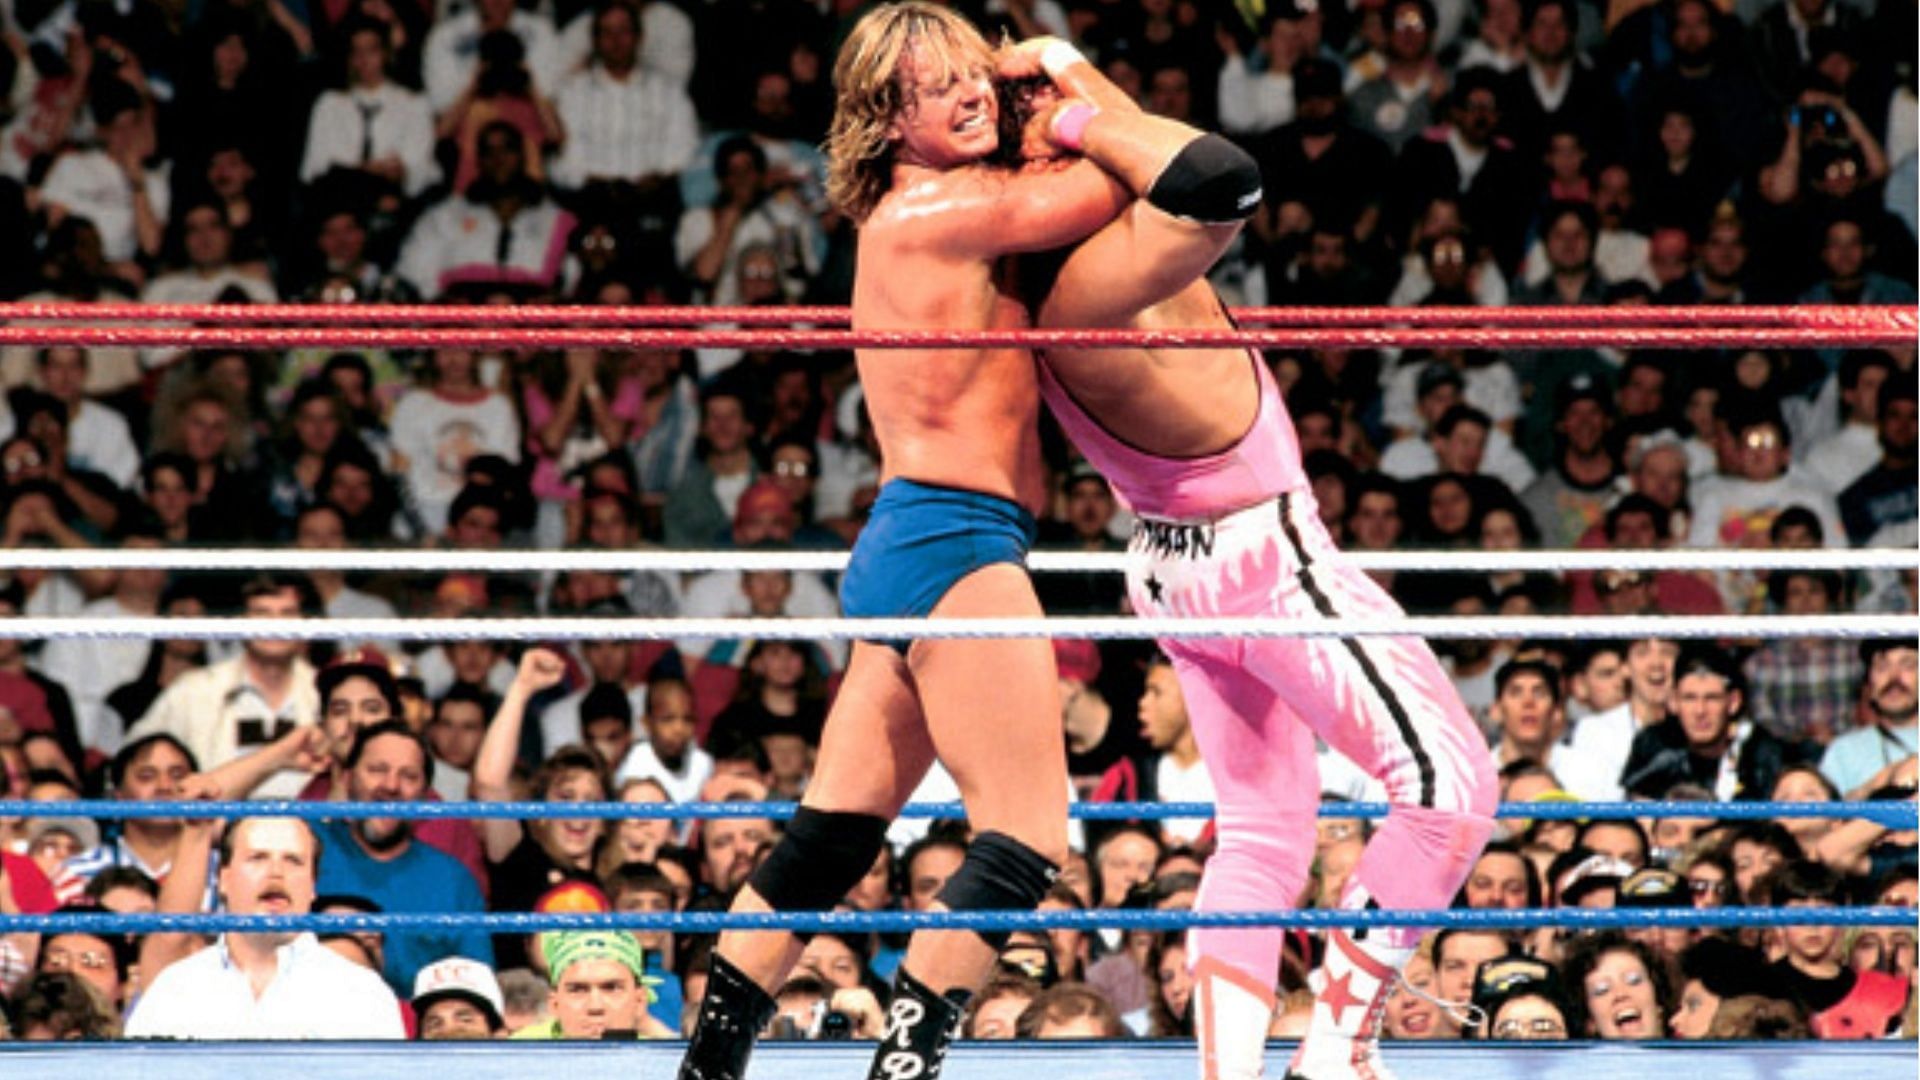 Bret Hart vs. Roddy Piper (Image via WWE)